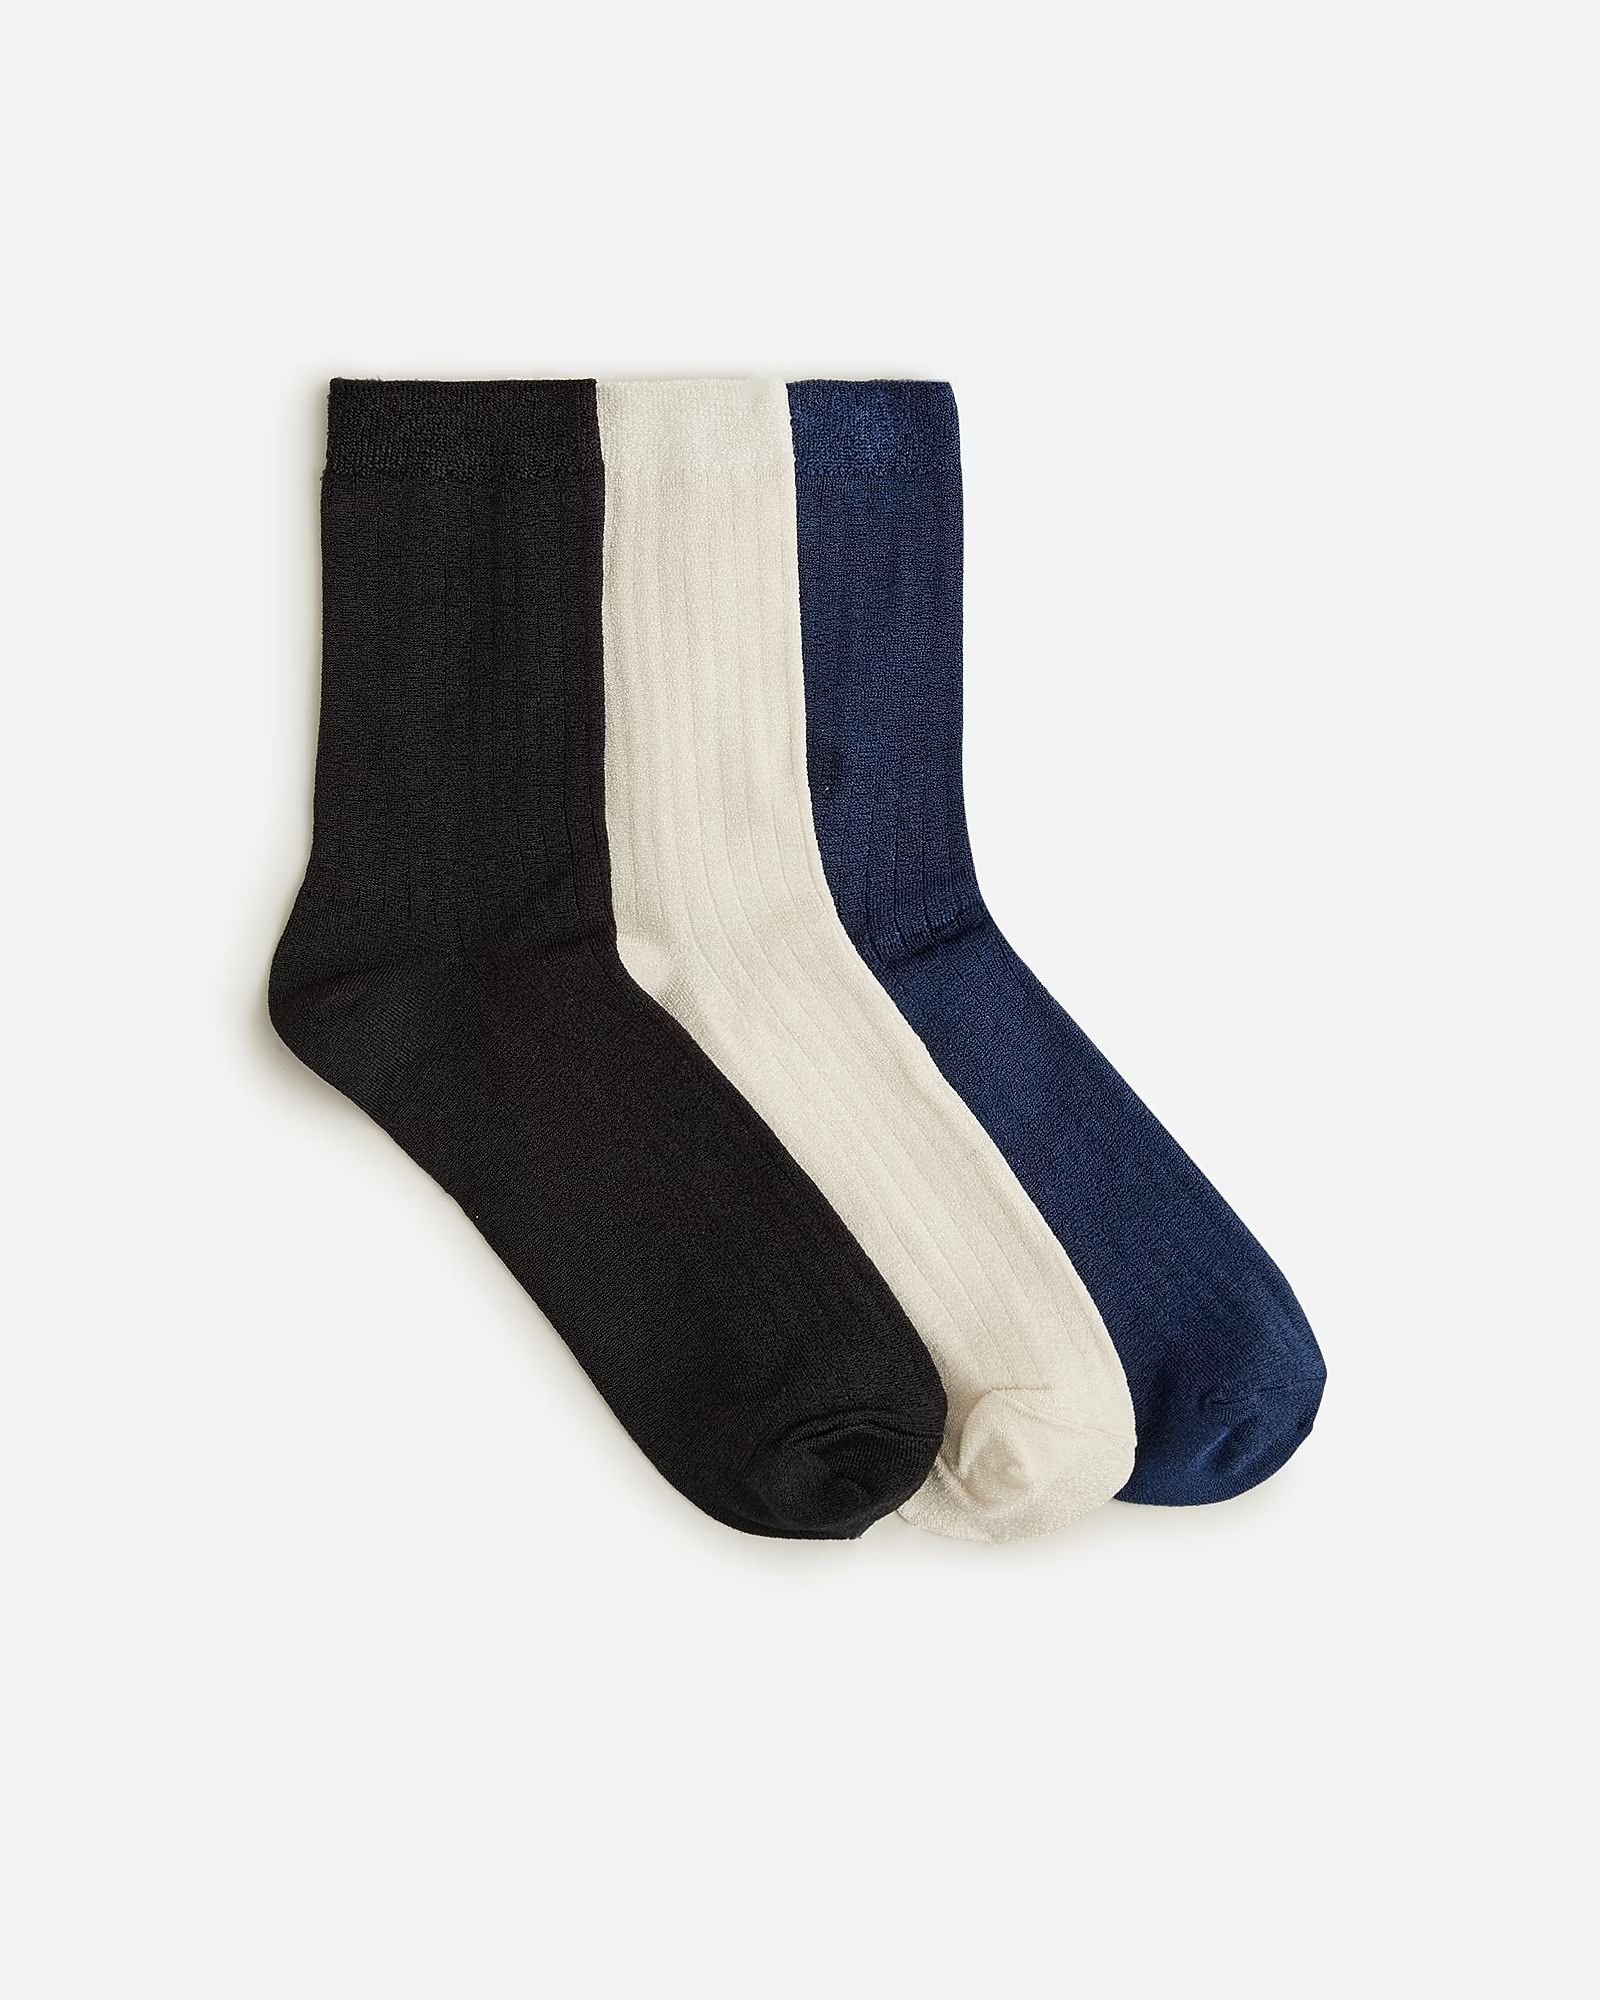 Ribbed bootie socks three-pack | J.Crew US